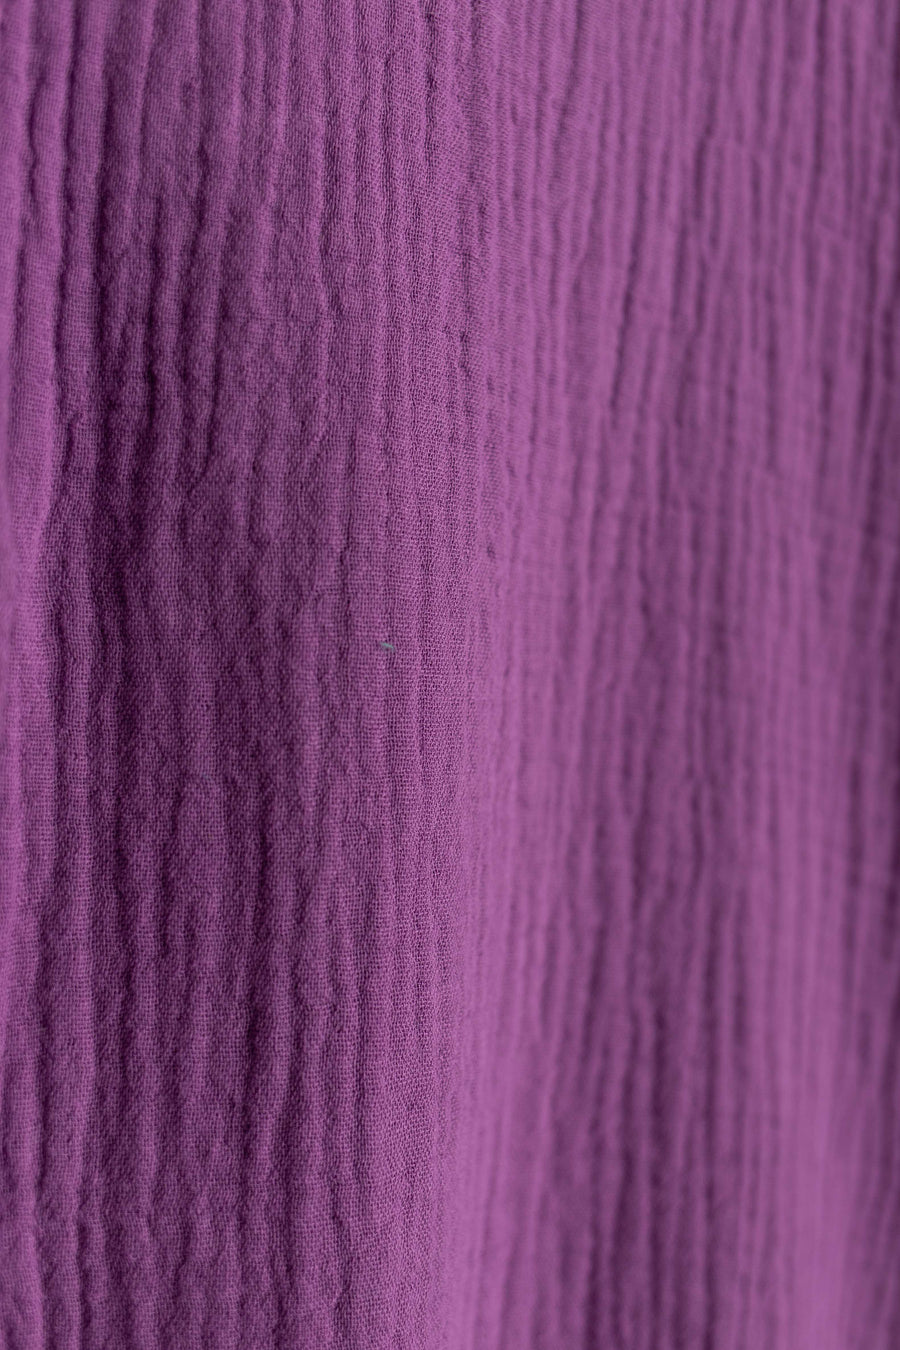 jackieandkate Bluse Musselin violet